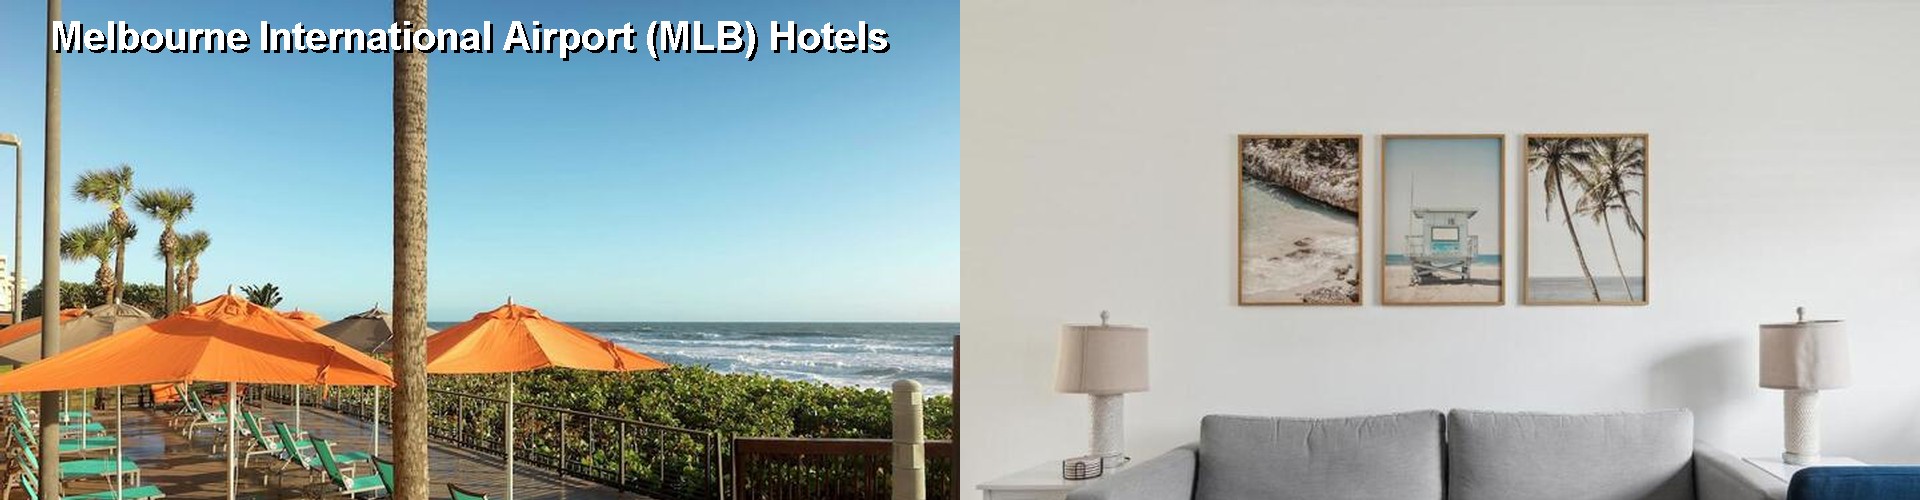 3 Best Hotels near Melbourne International Airport (MLB)